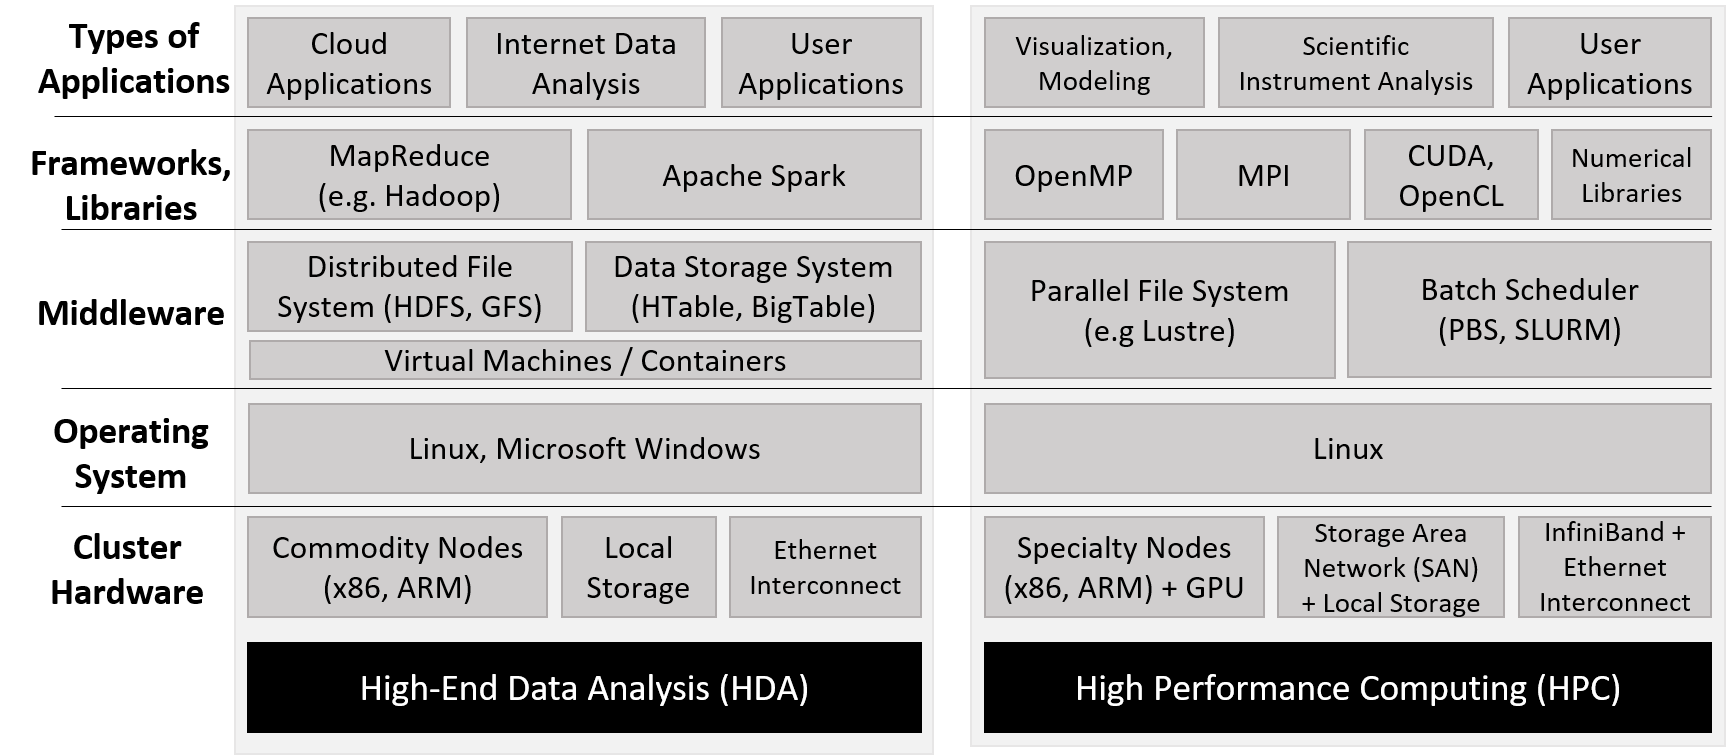 High-end Data Analysis (HDA) vs High Performance Computing (HPC).